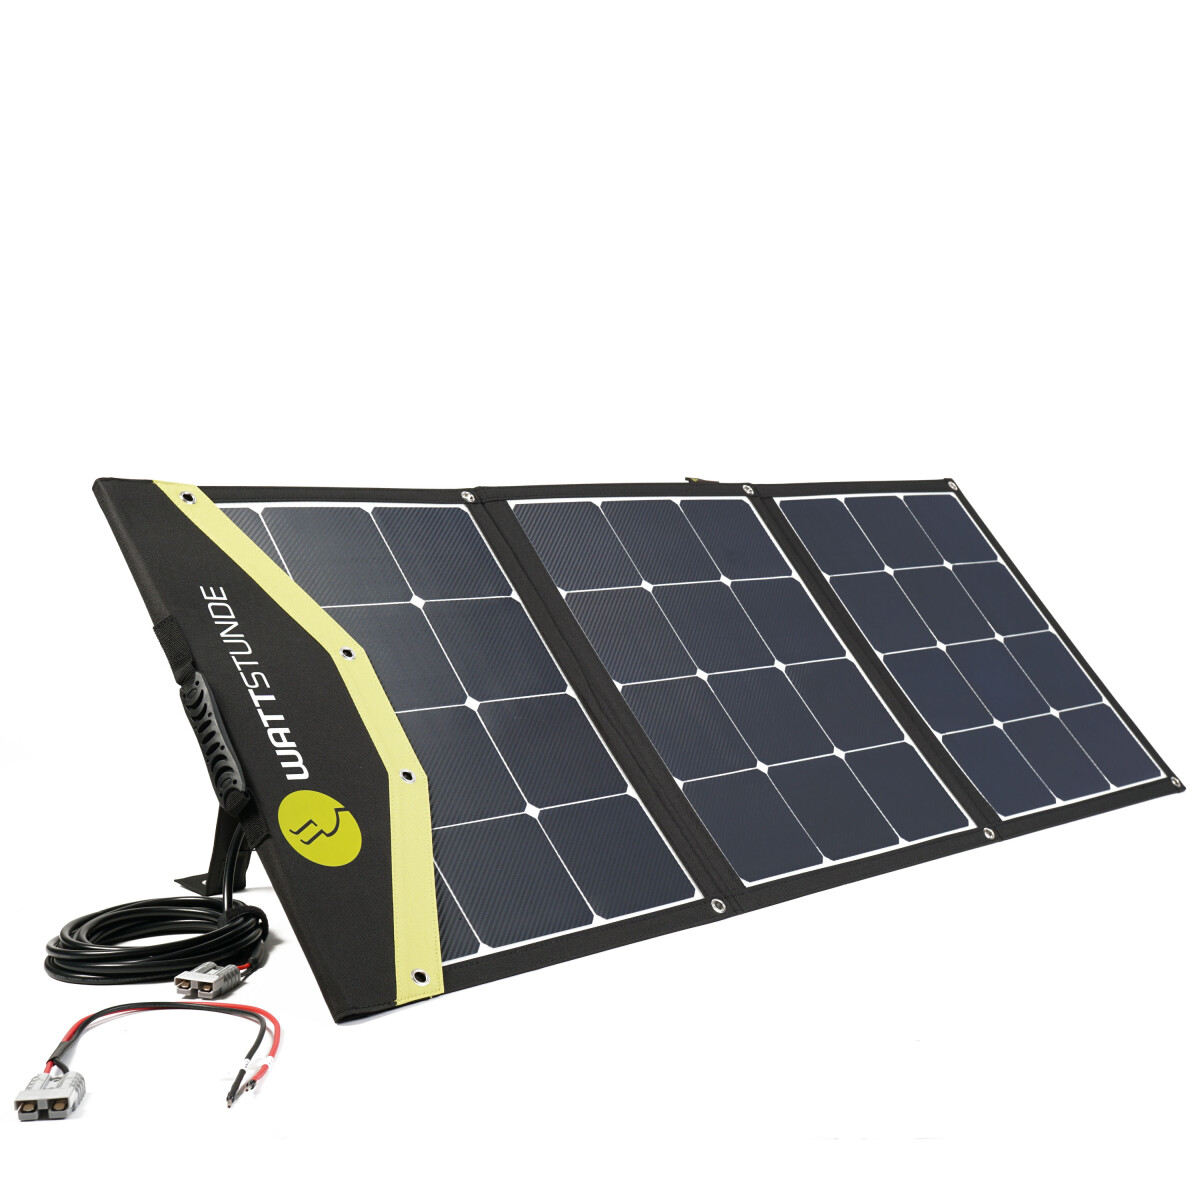 https://solarkontor.de/media/image/product/7821/lg/wattstunde-ws140sf-sunfolder-140wp-solartasche.jpg